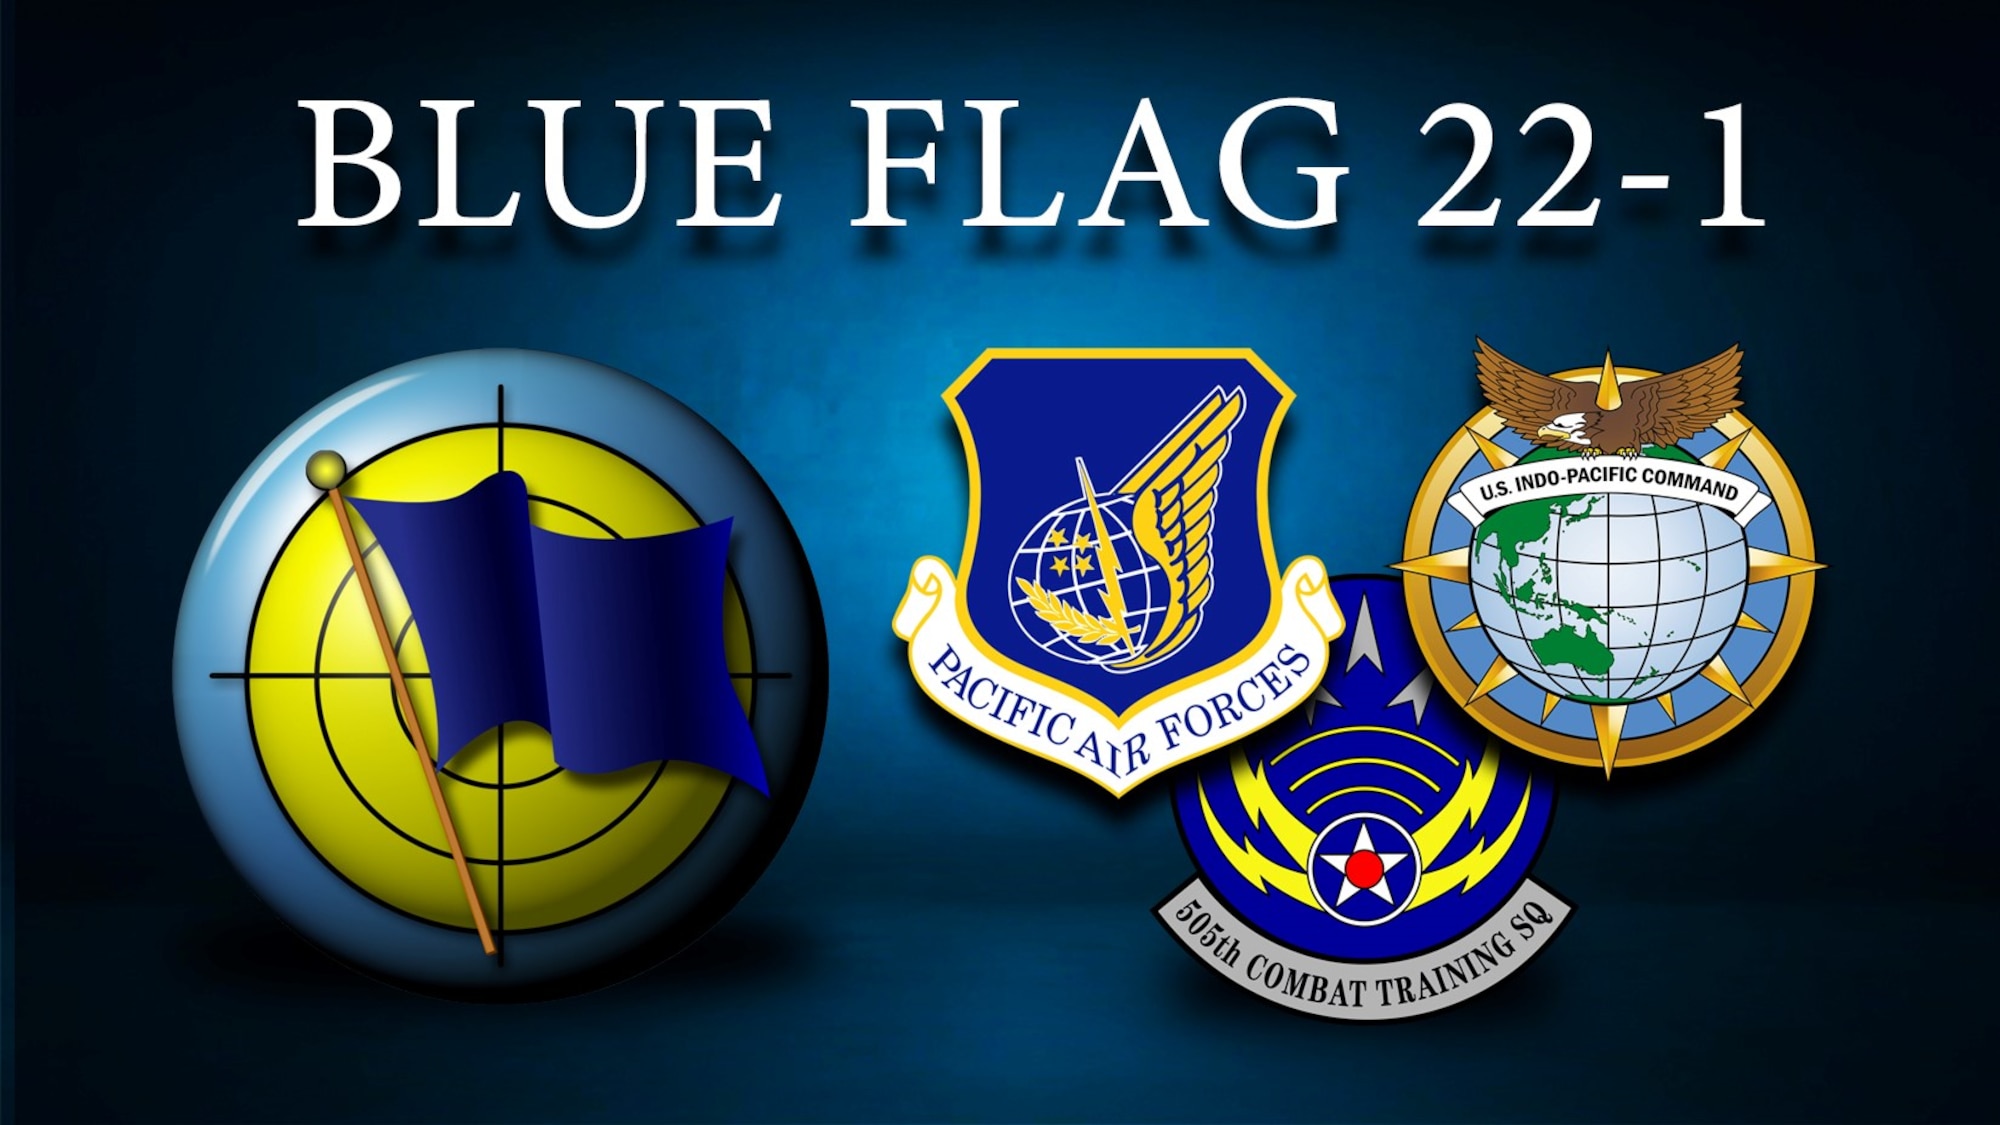 Air Force leads a new era in air component training through BLUE FLAG